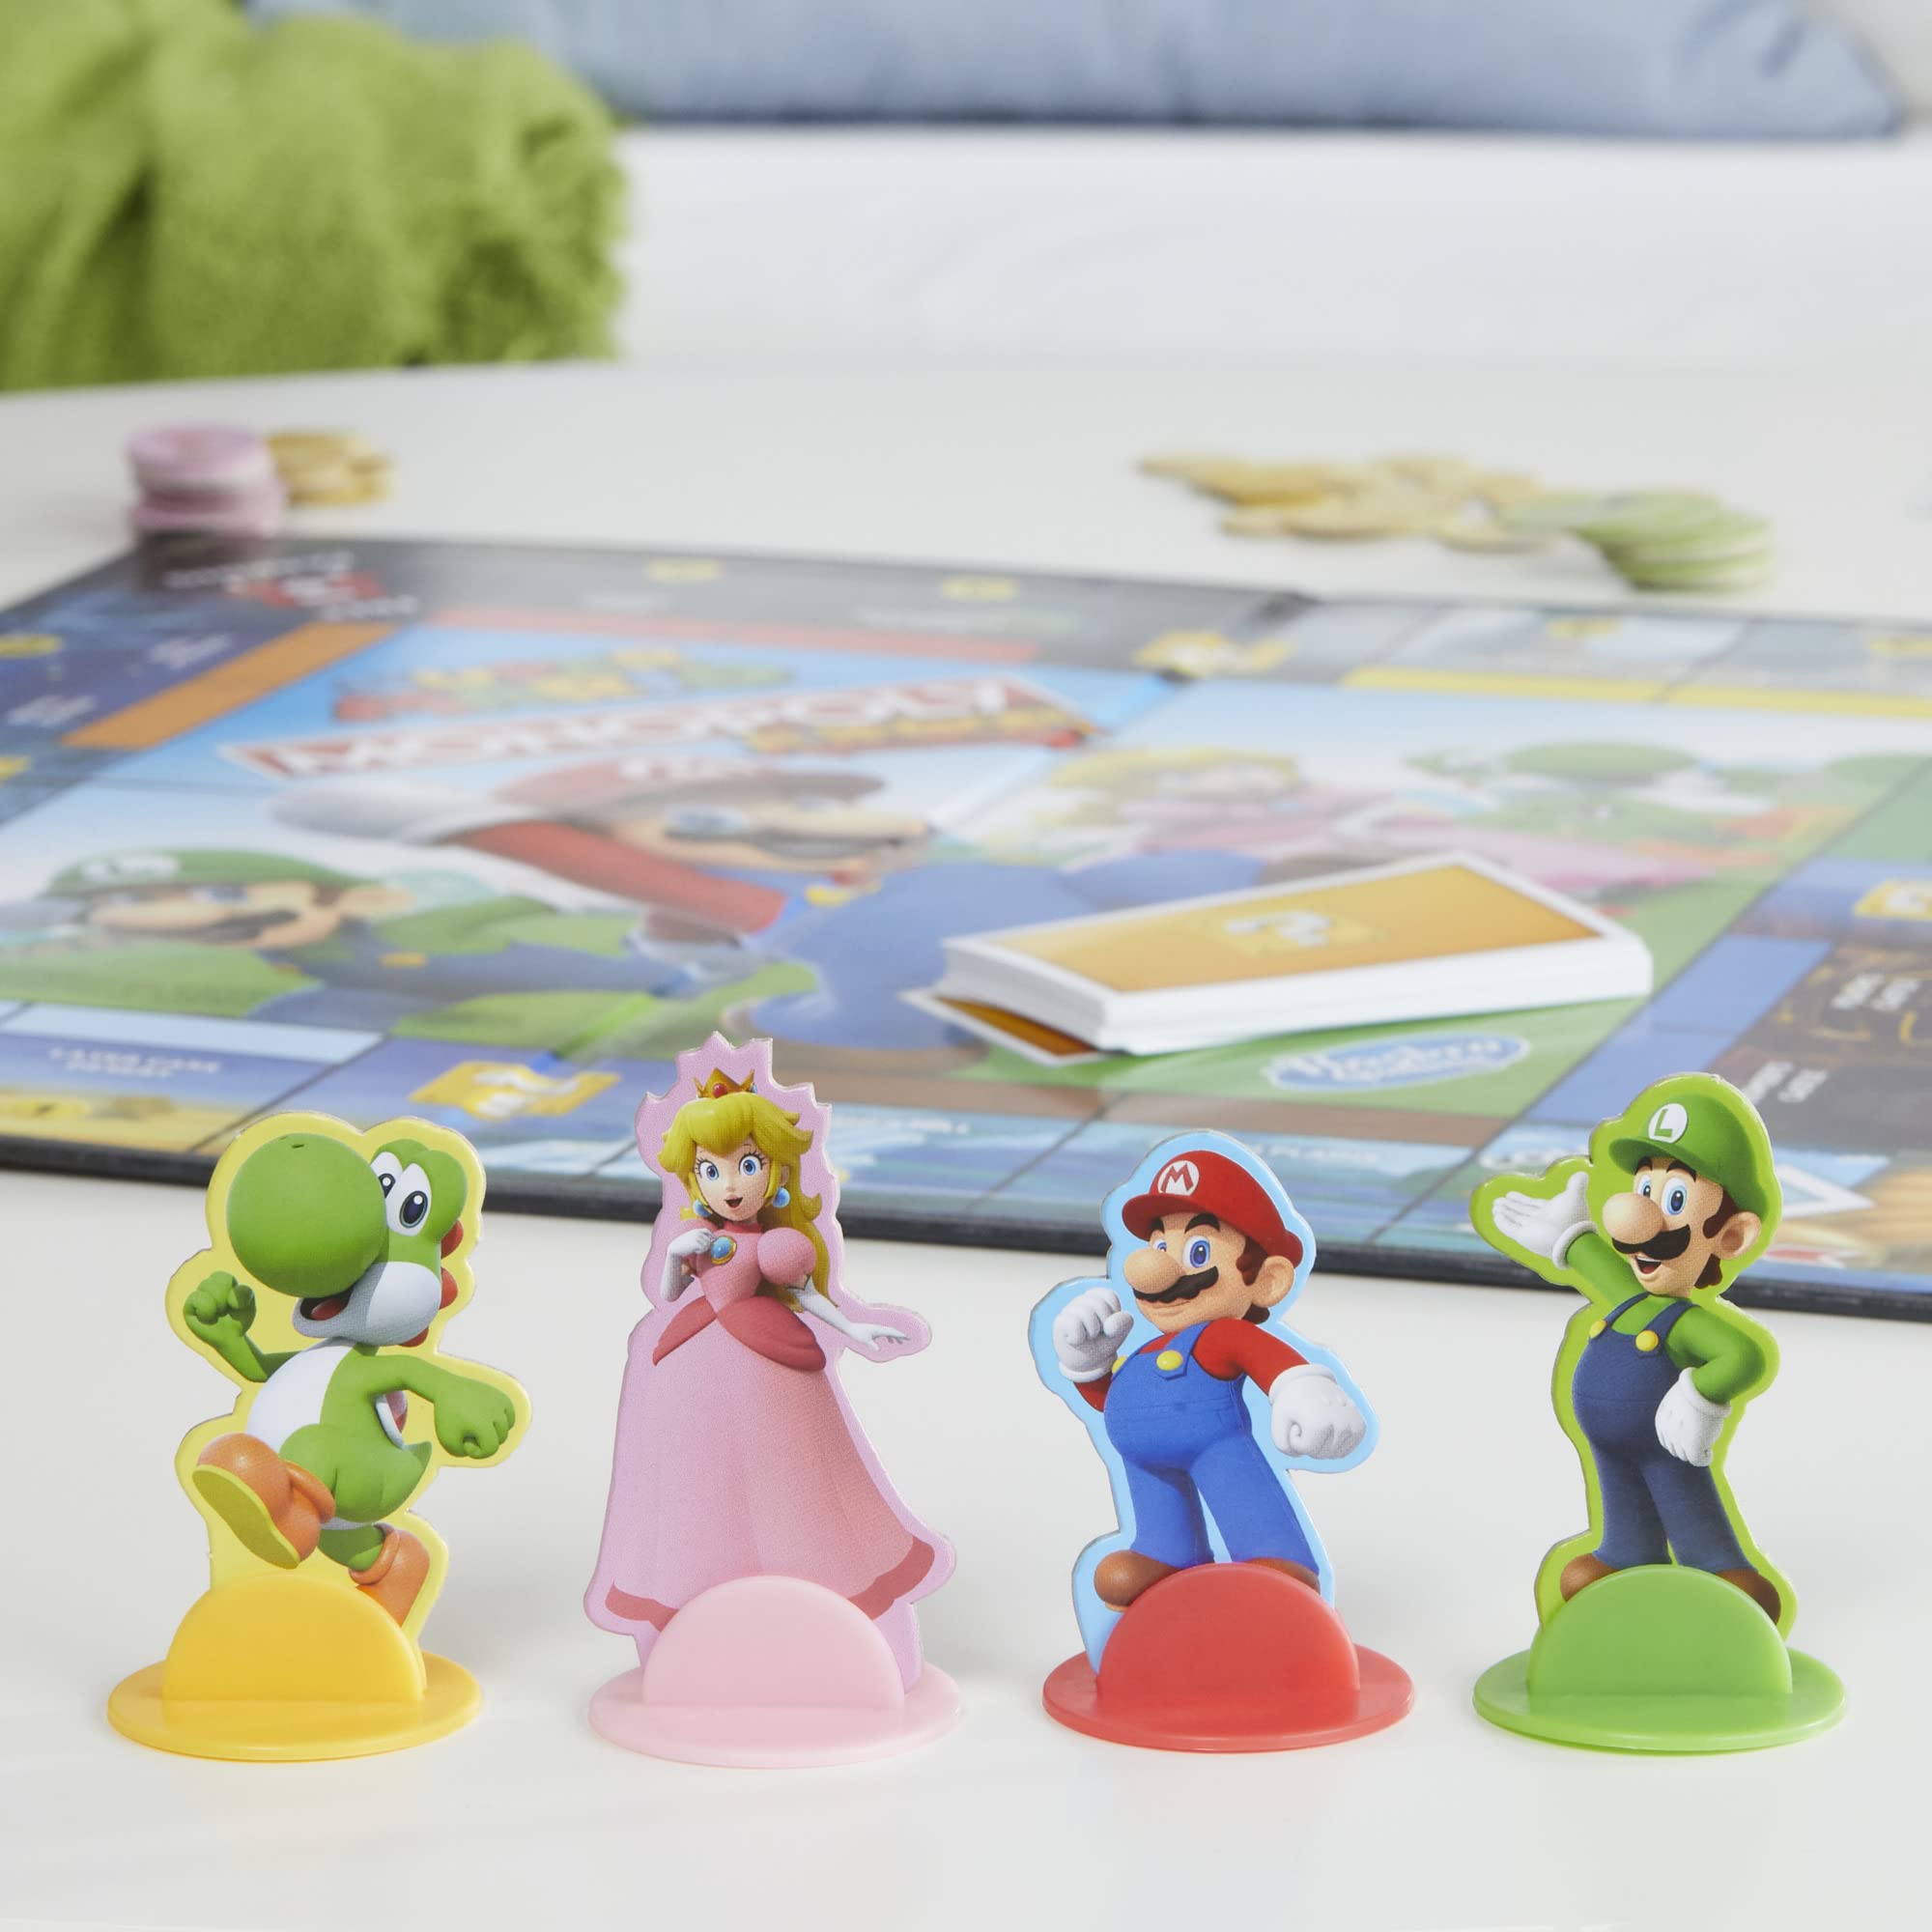 Monopoly Junior Super Mario Edition Board Game, Fun Kids' Ages 5 and Up, Explore The Mushroom Kingdom as Mario, Peach, Yoshi, or Luigi (Amazon Exclusive)